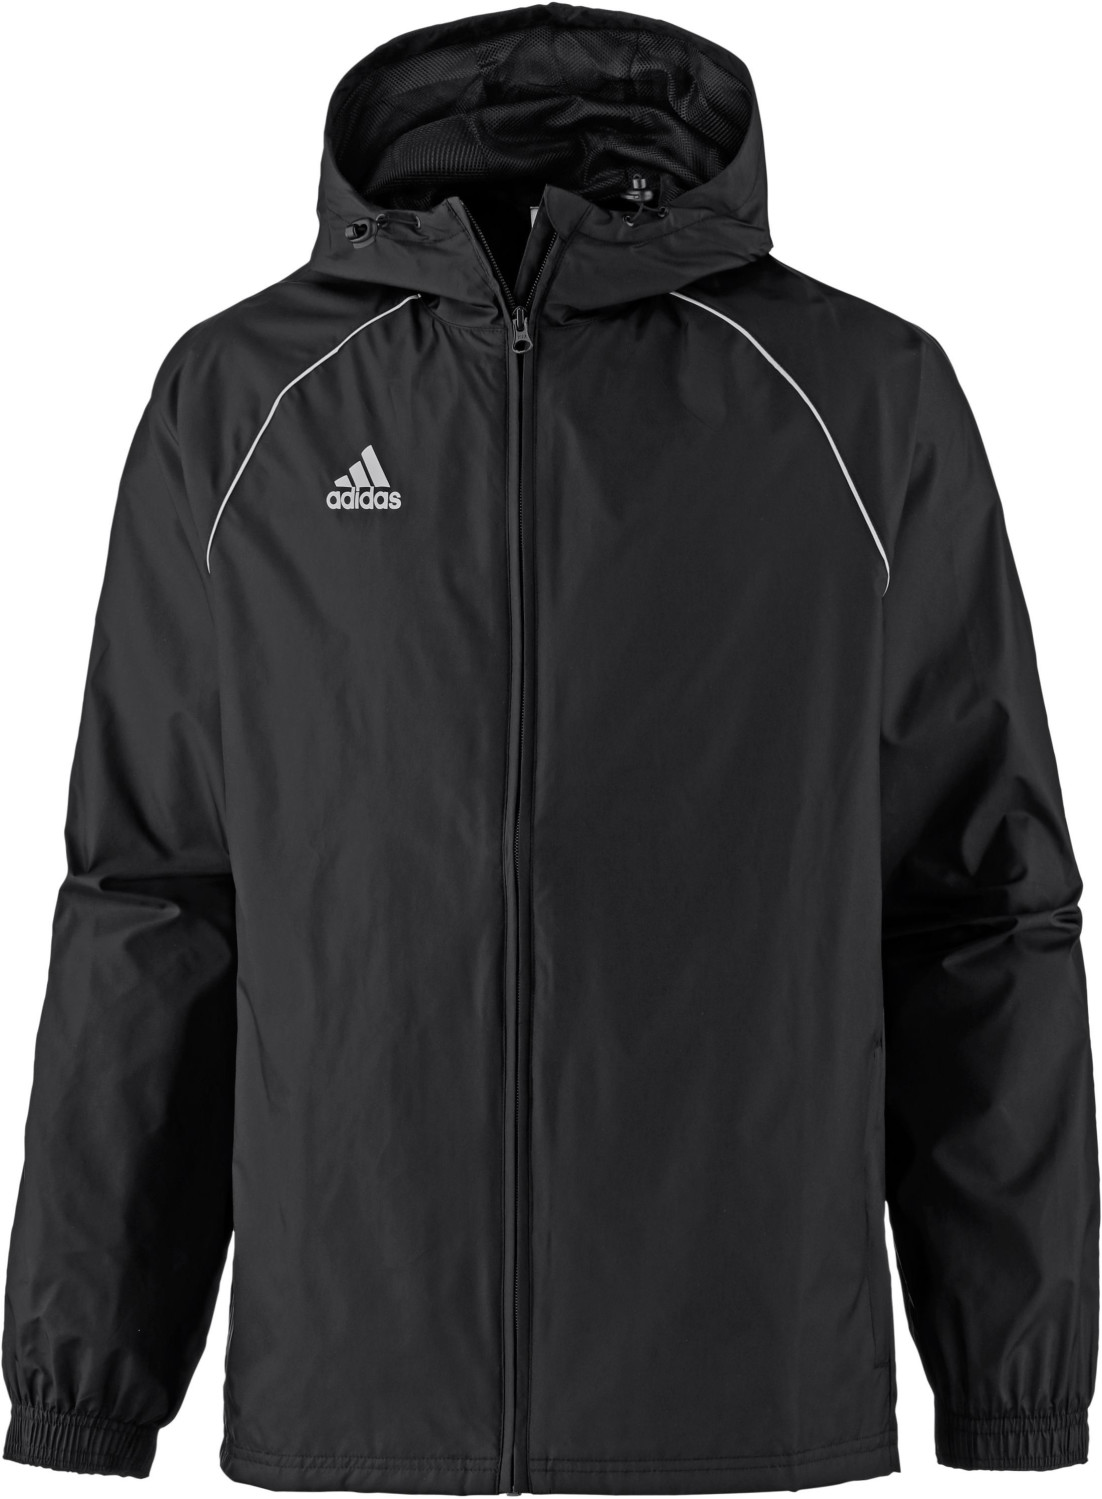 Adidas Core 18 Rainjacket black/white